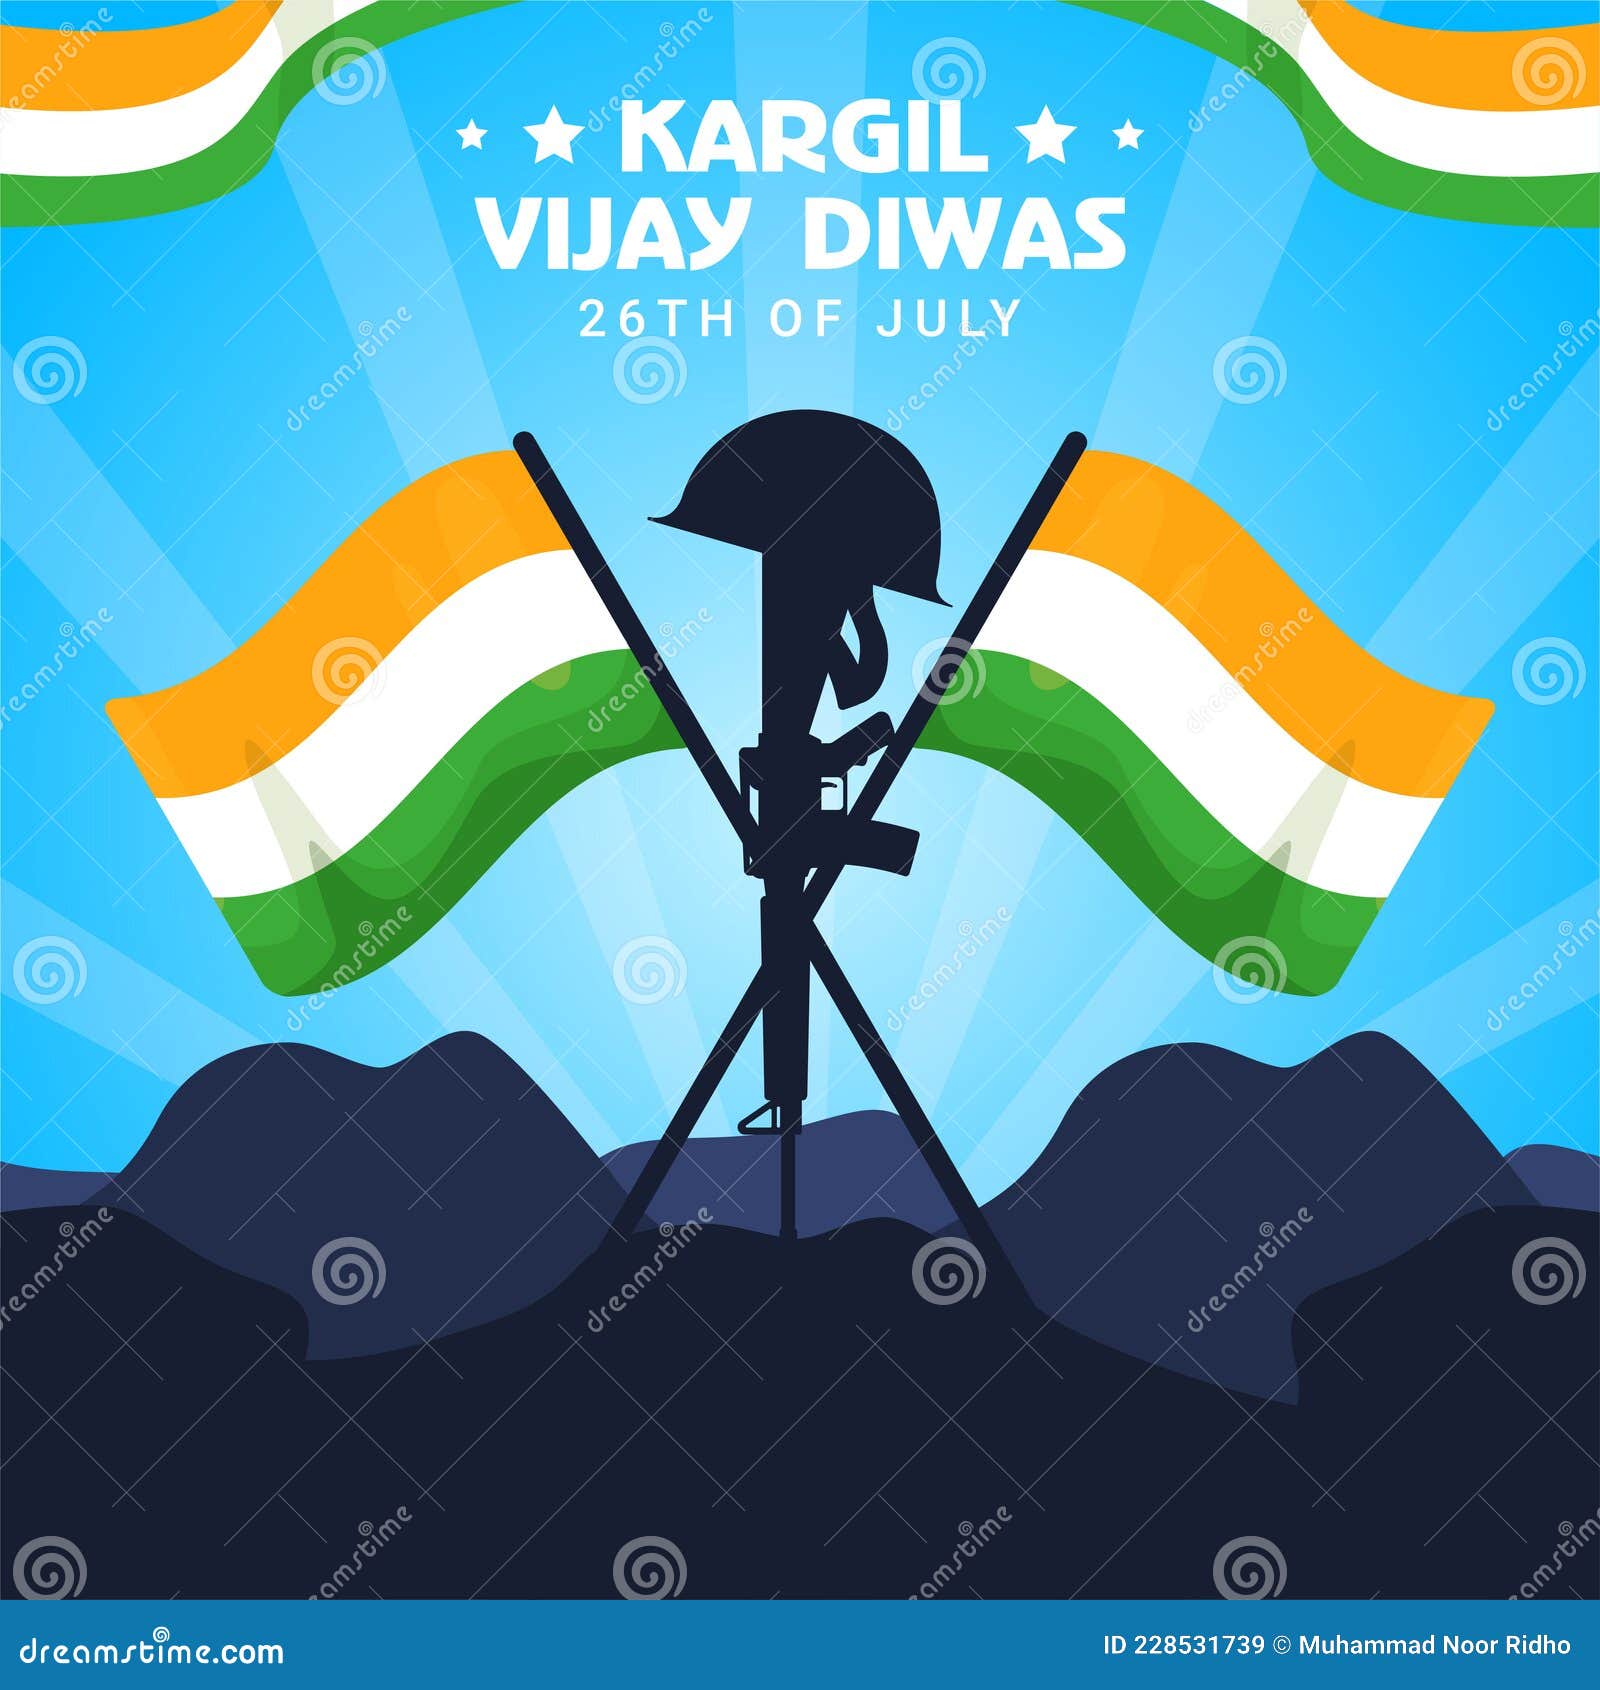 Kargil Vijay Diwas 2021 Images, Whatsapp Status Photos, Wallpapers, Banner  Download - September 2023